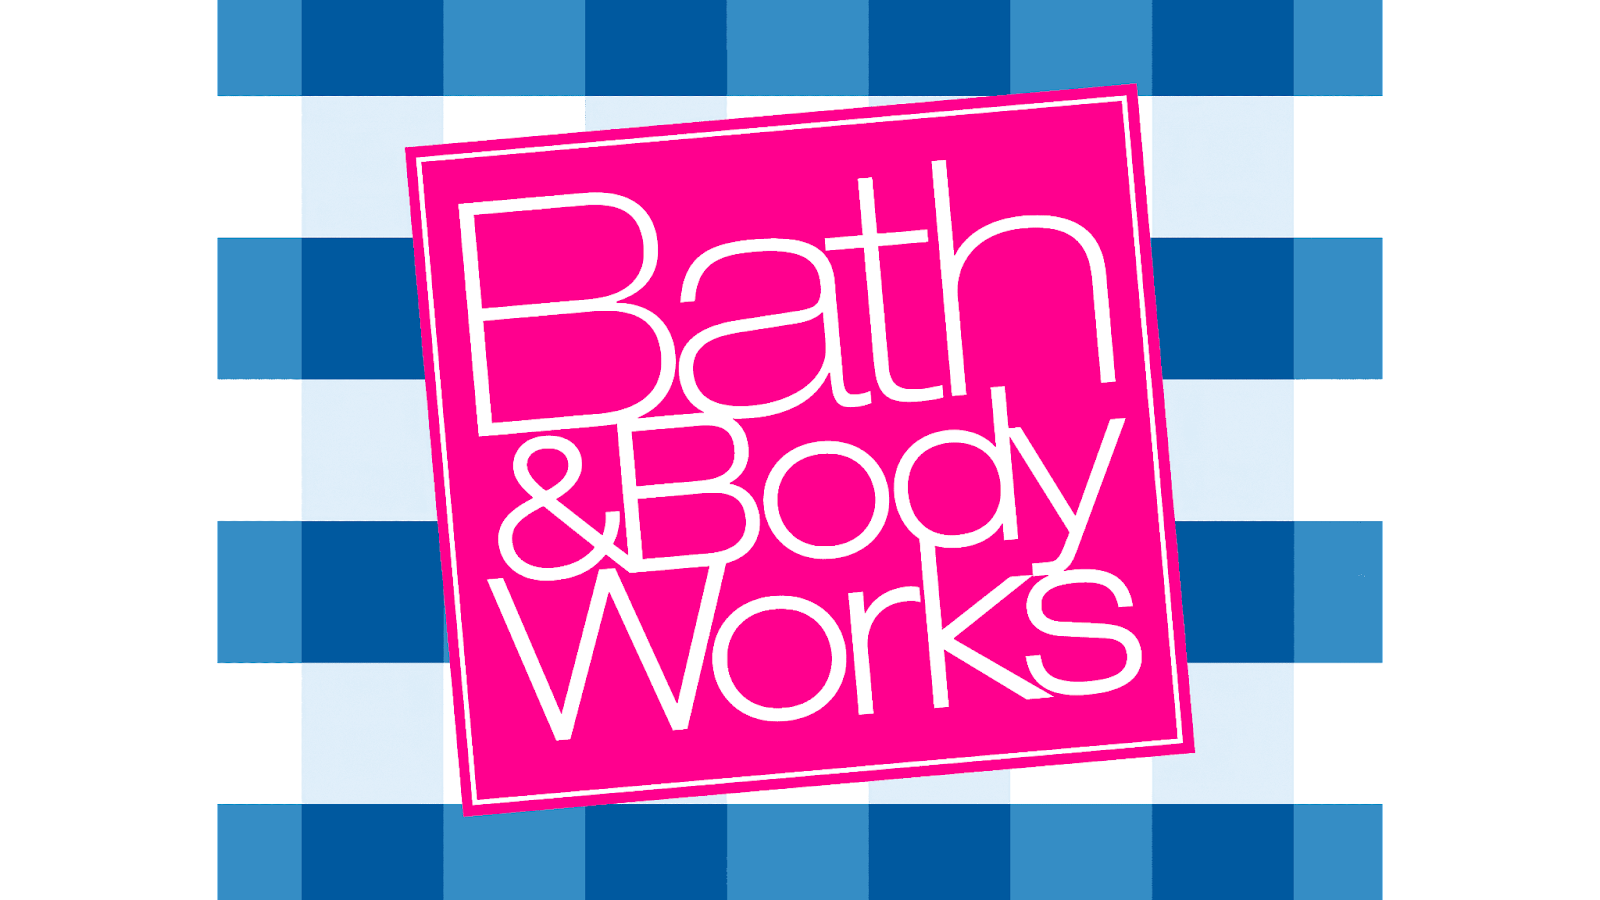 The logo for Bath & Body Works